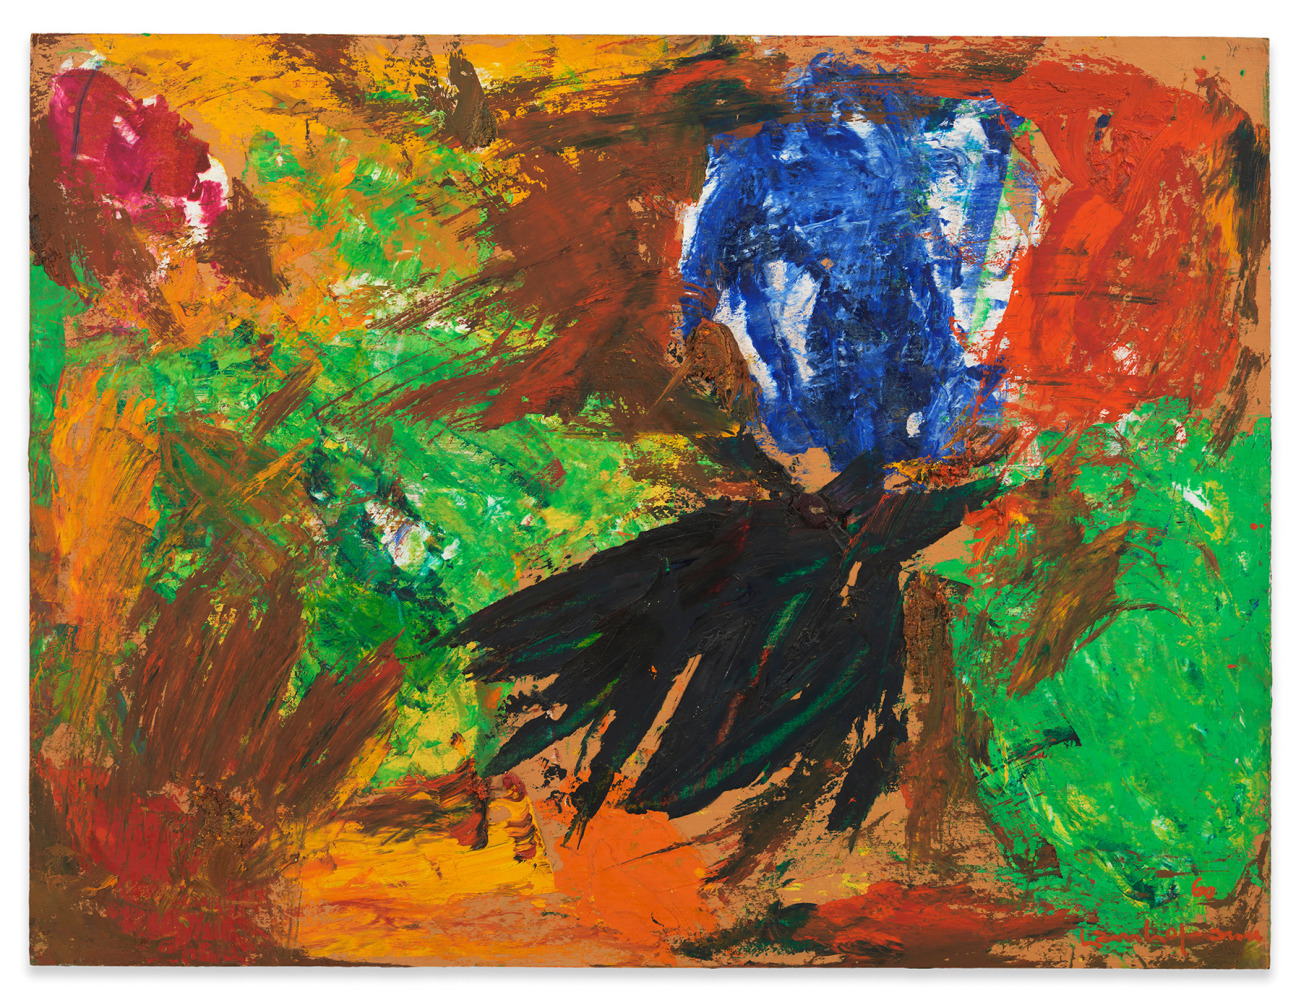 Hans Hofmann

Dead Crow, 1960

Oil on upon board

24h x 32w in

&amp;nbsp;